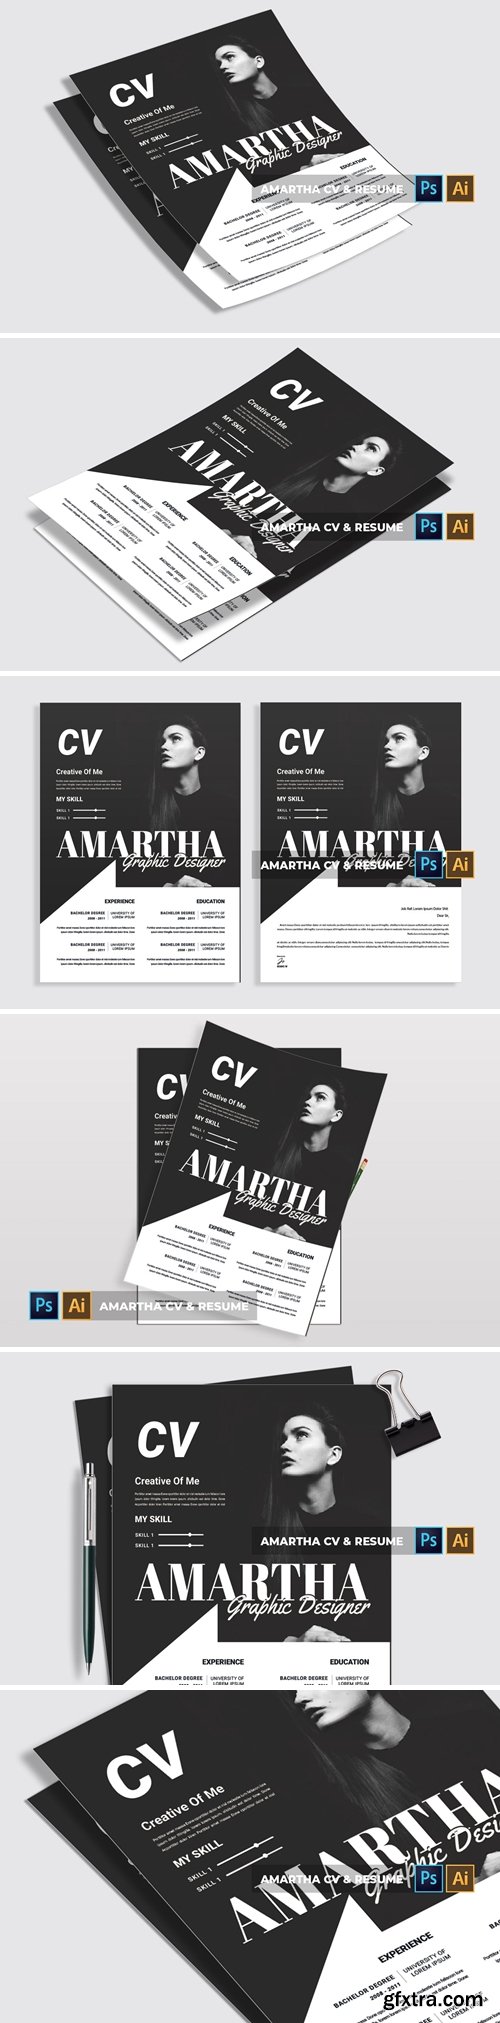 Amartha | CV & Resume